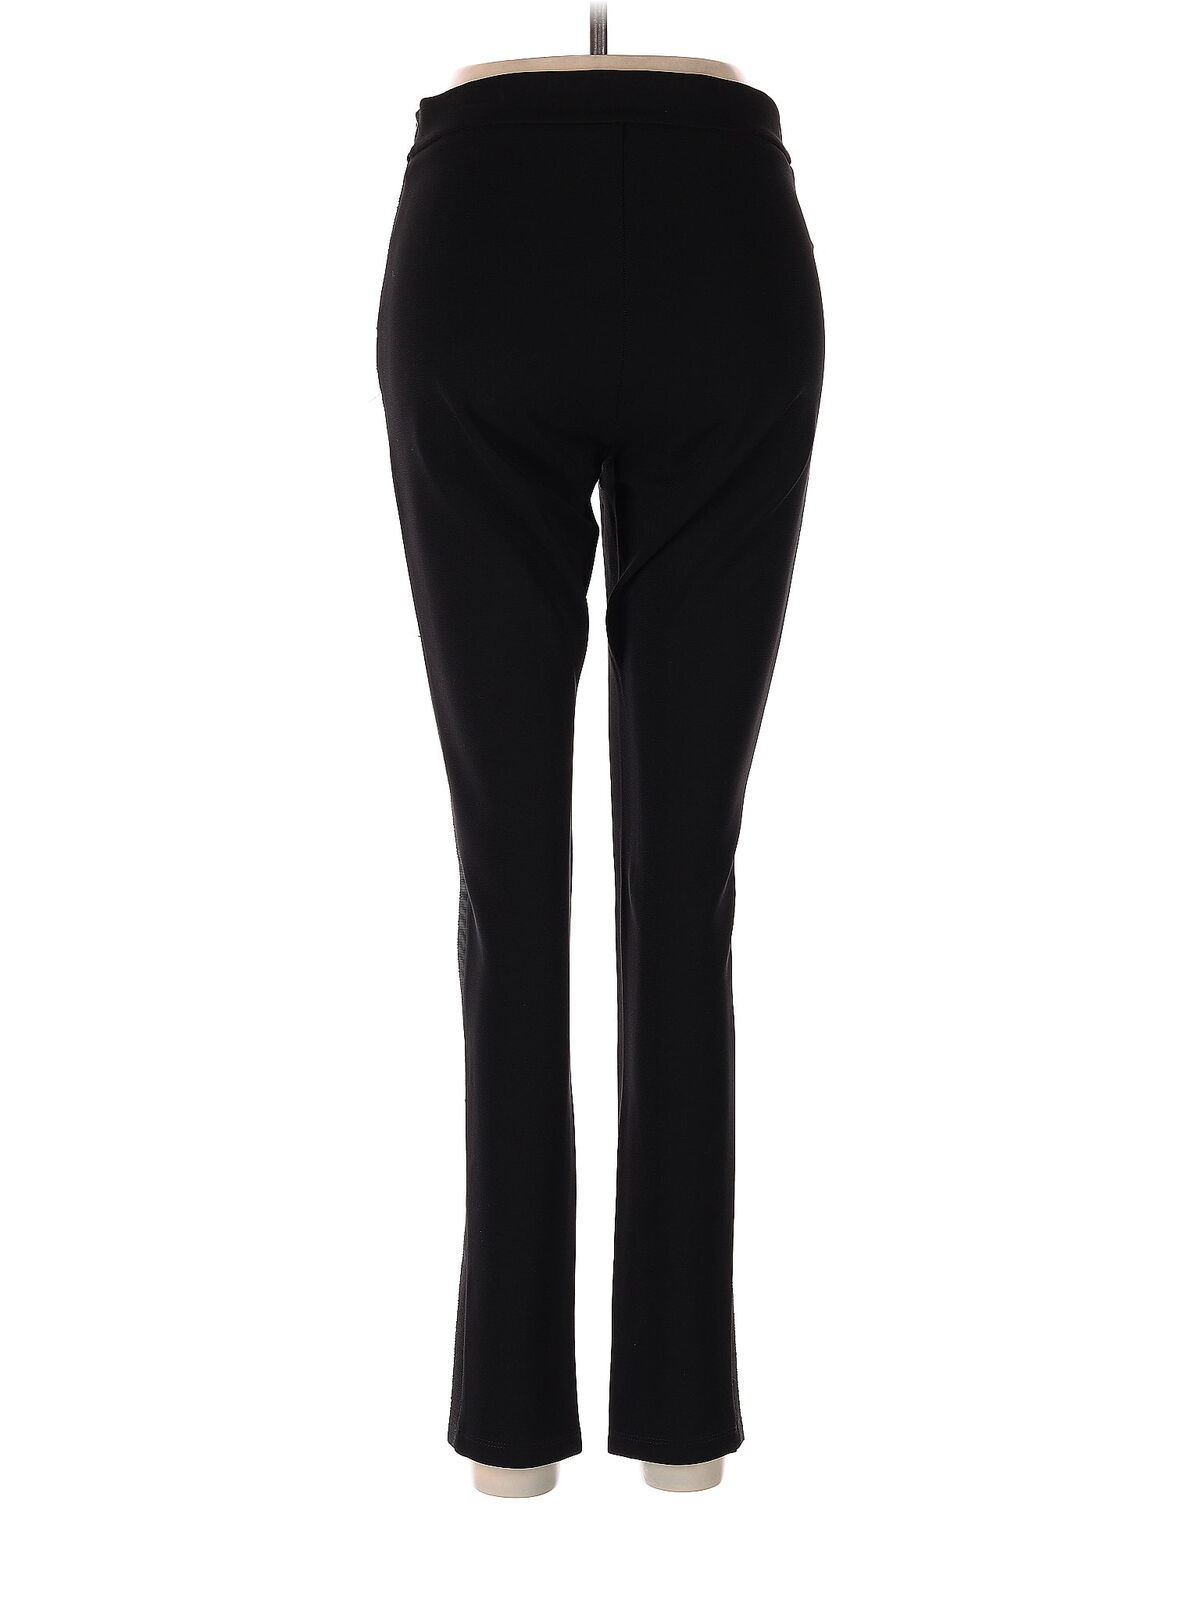 Max Mara Women Black Dress Pants M - image 2